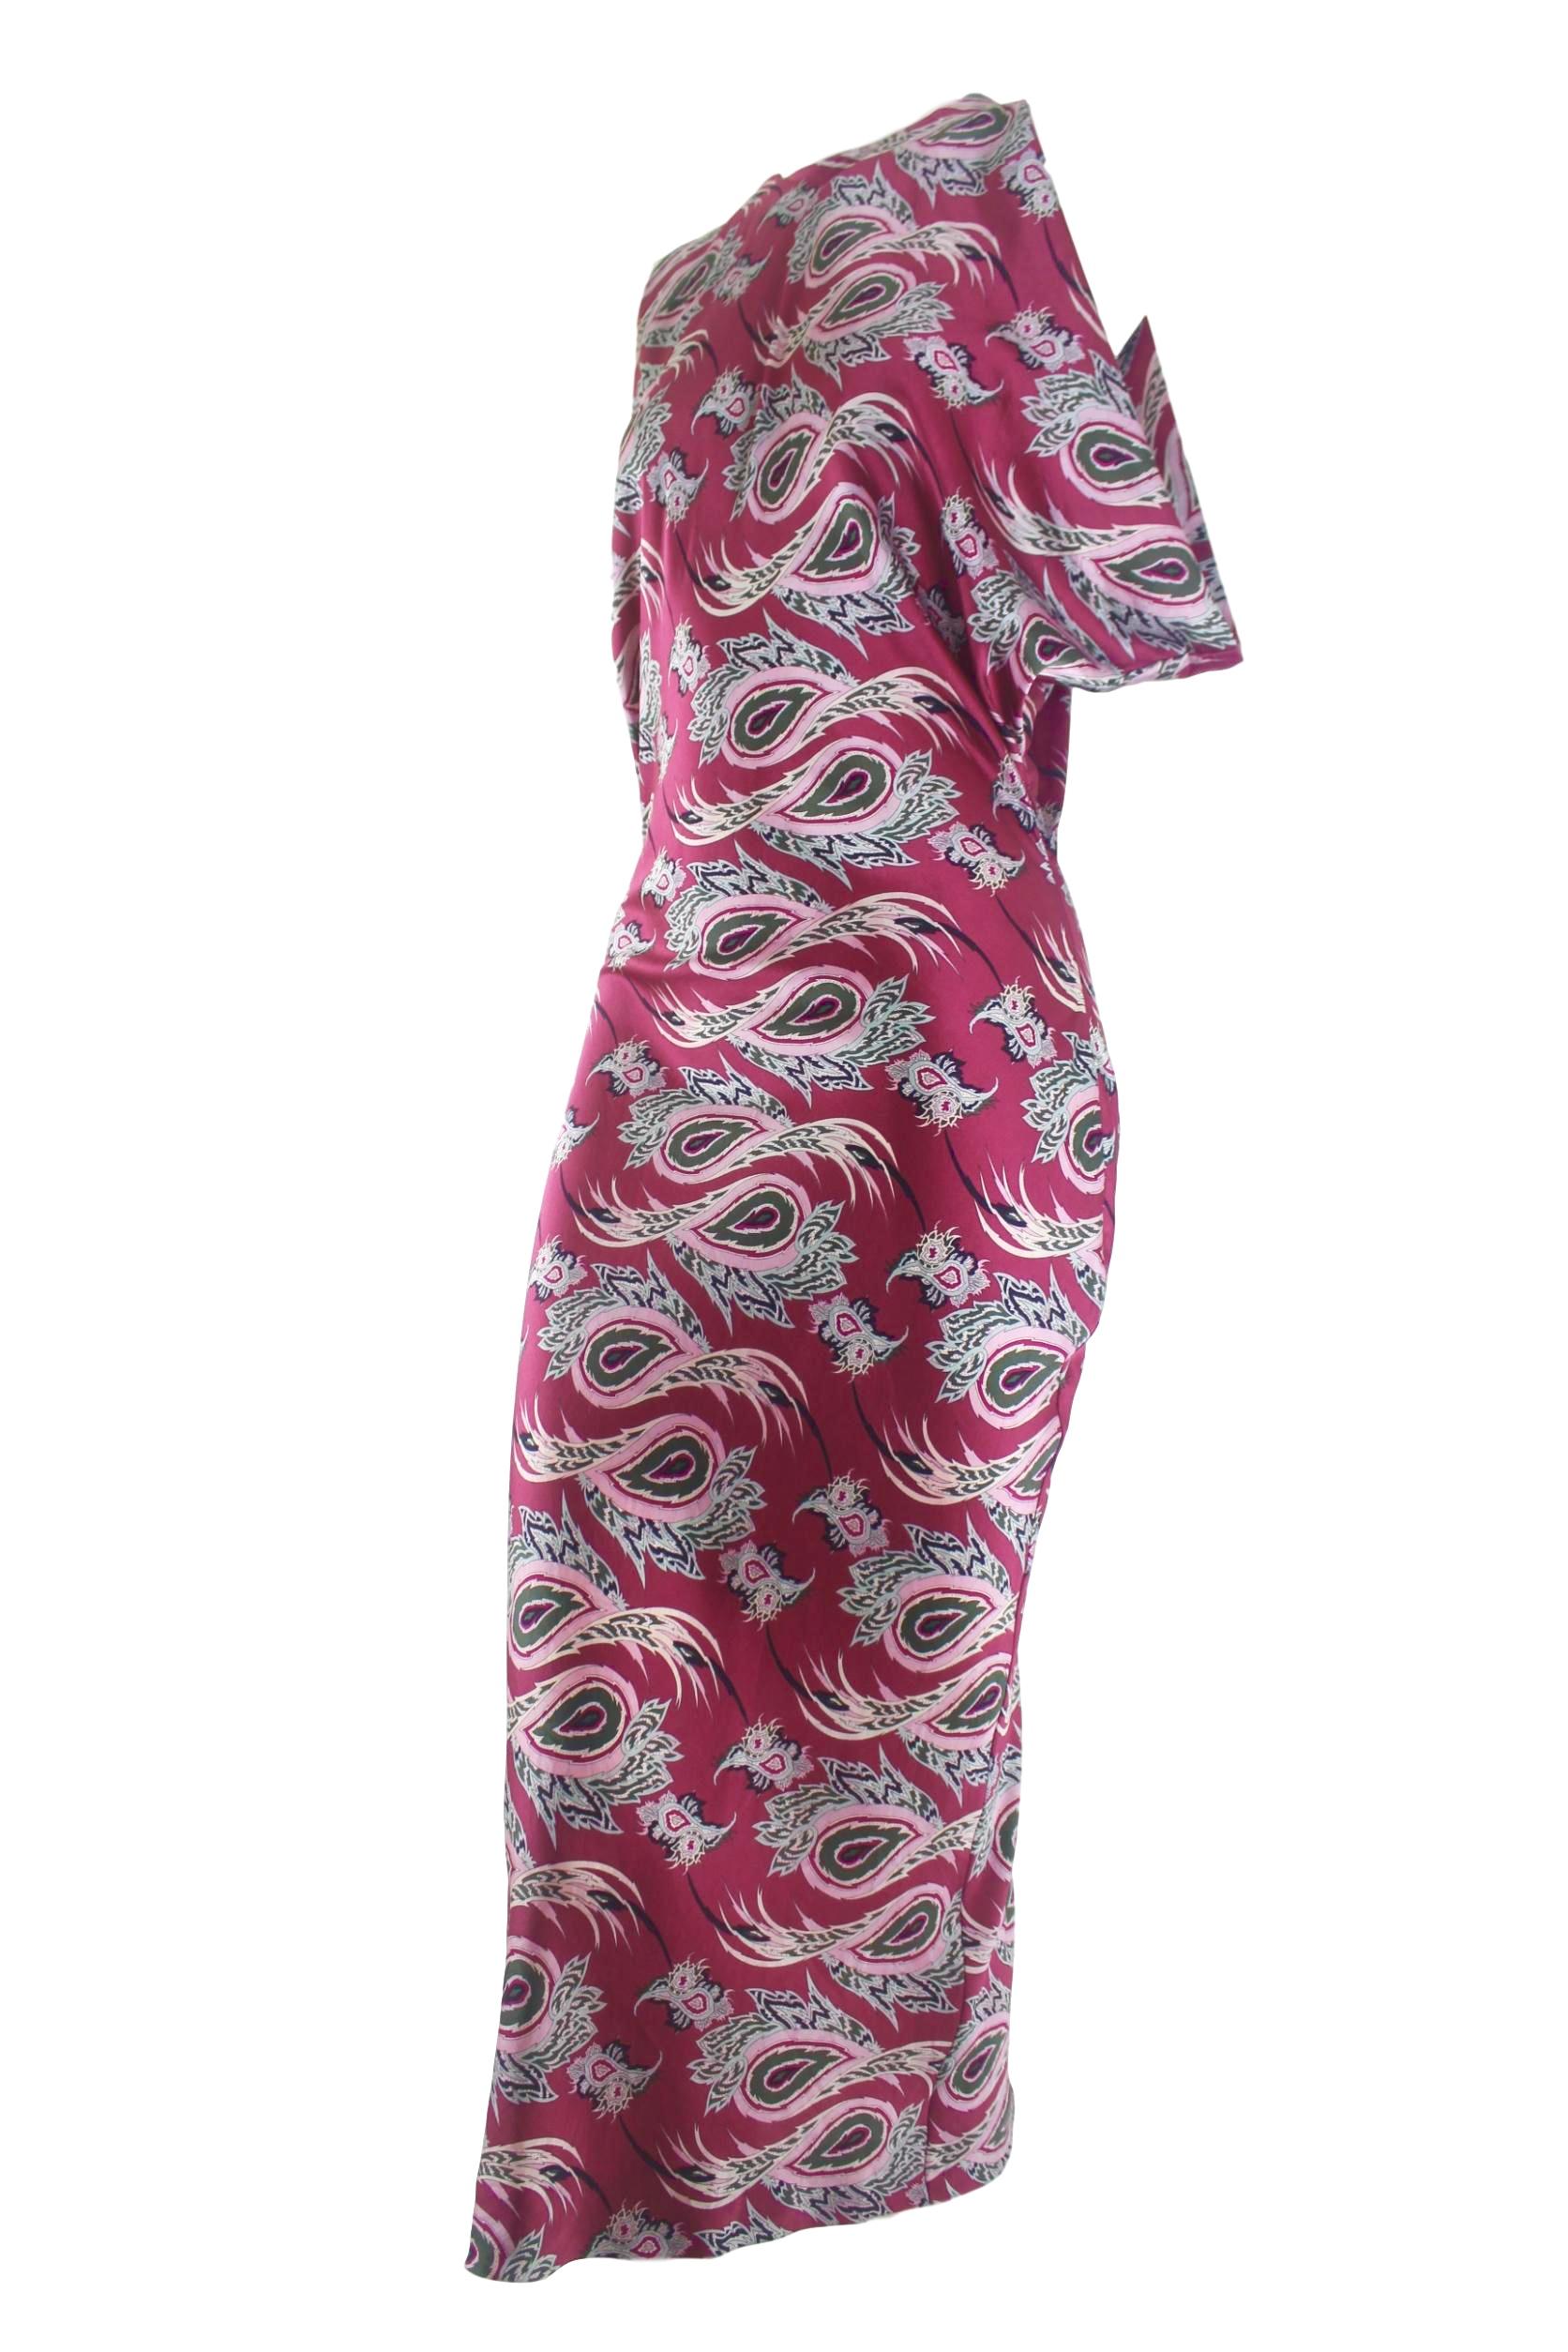 Alexander McQueen
Silk Paisley Print Dress
Labelled size 40
Look number 46 on runway